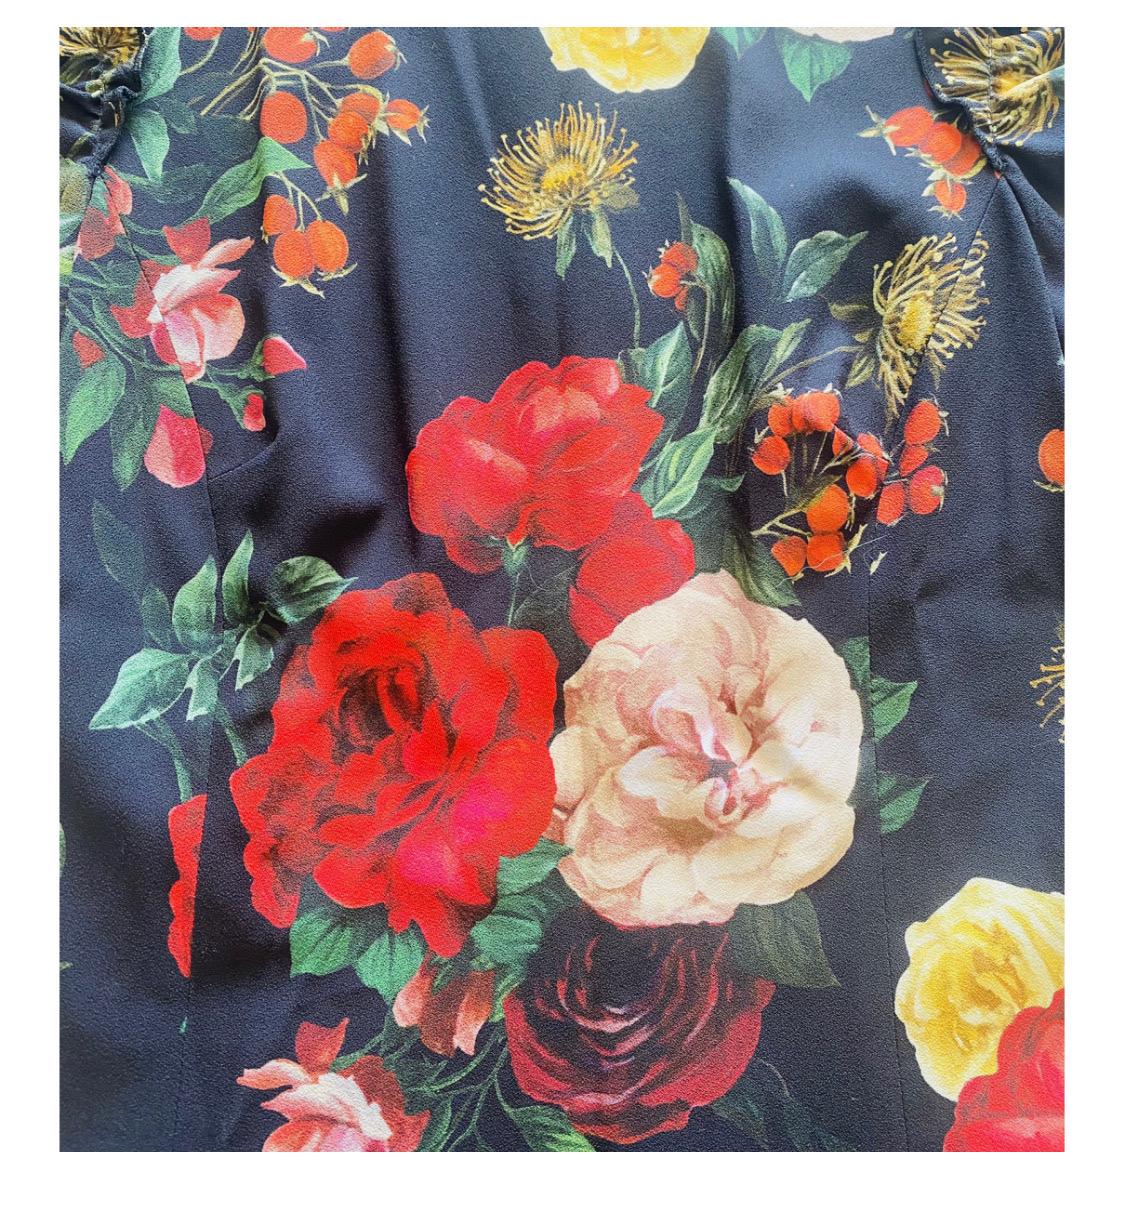 dolce gabbana floral blouse